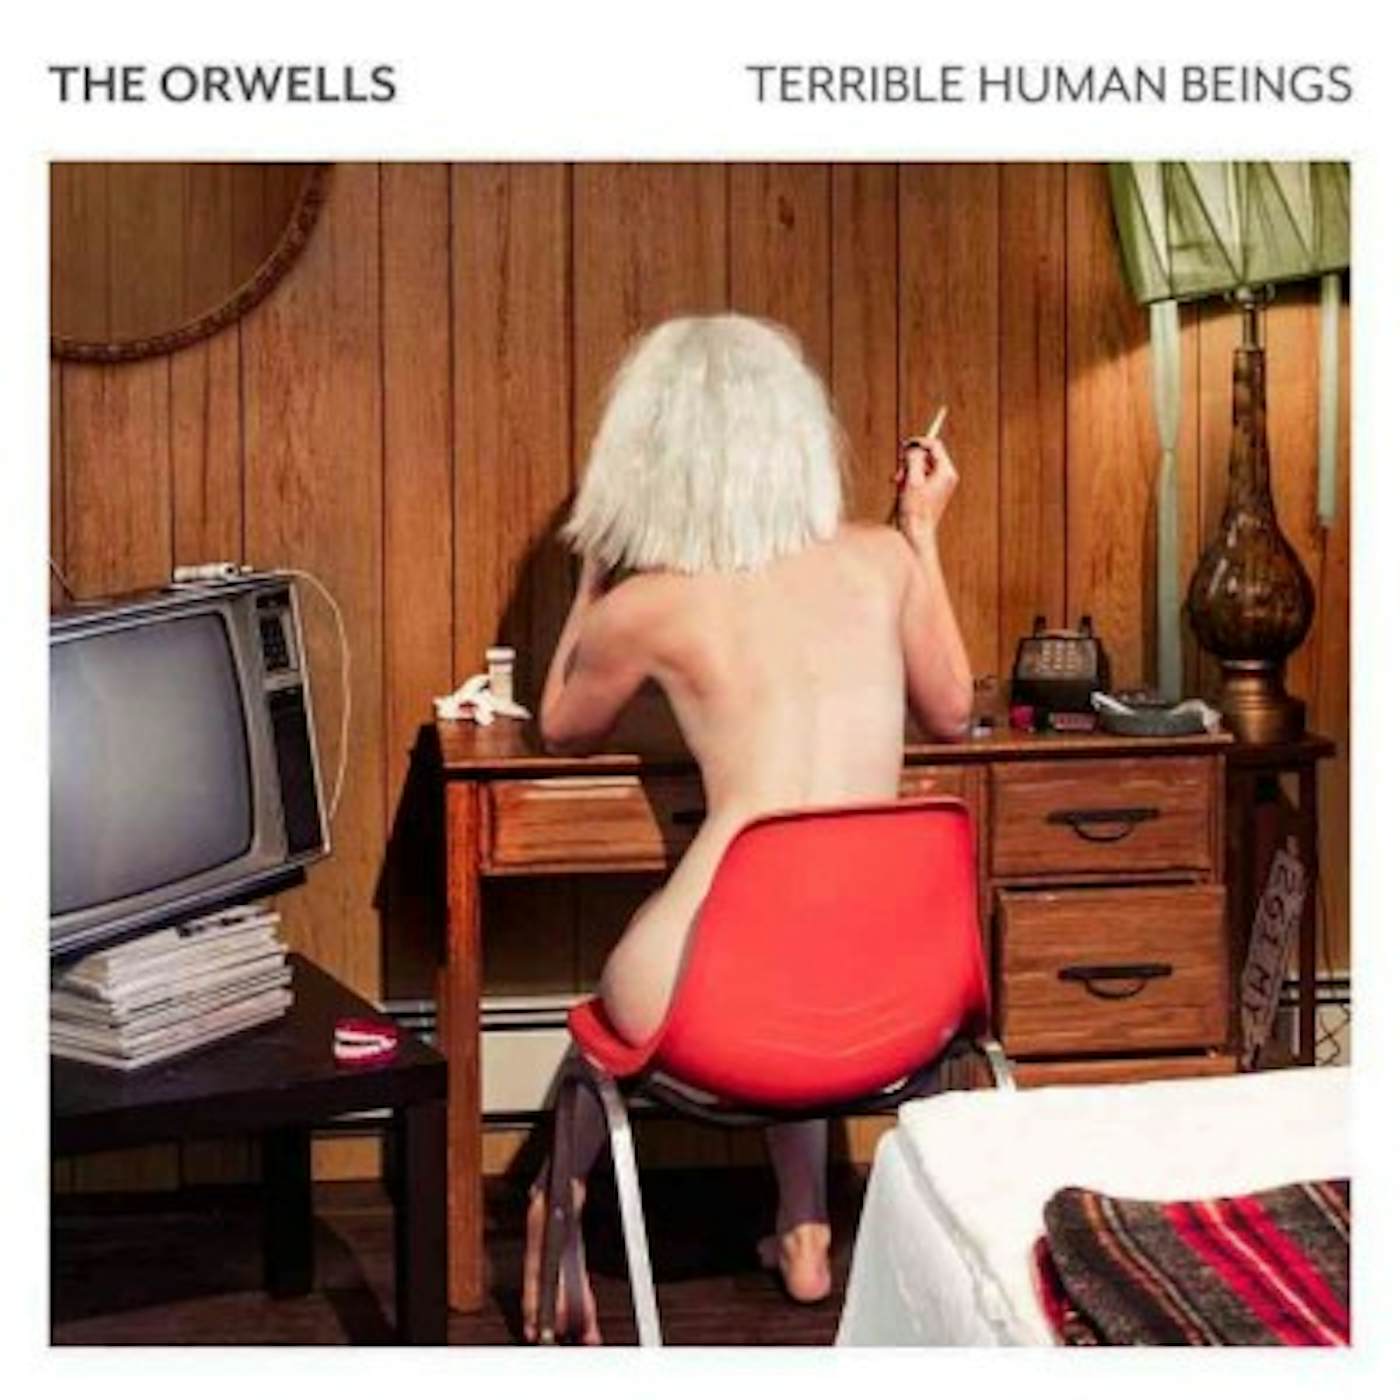 The Orwells Terrible Human Beings Vinyl Record